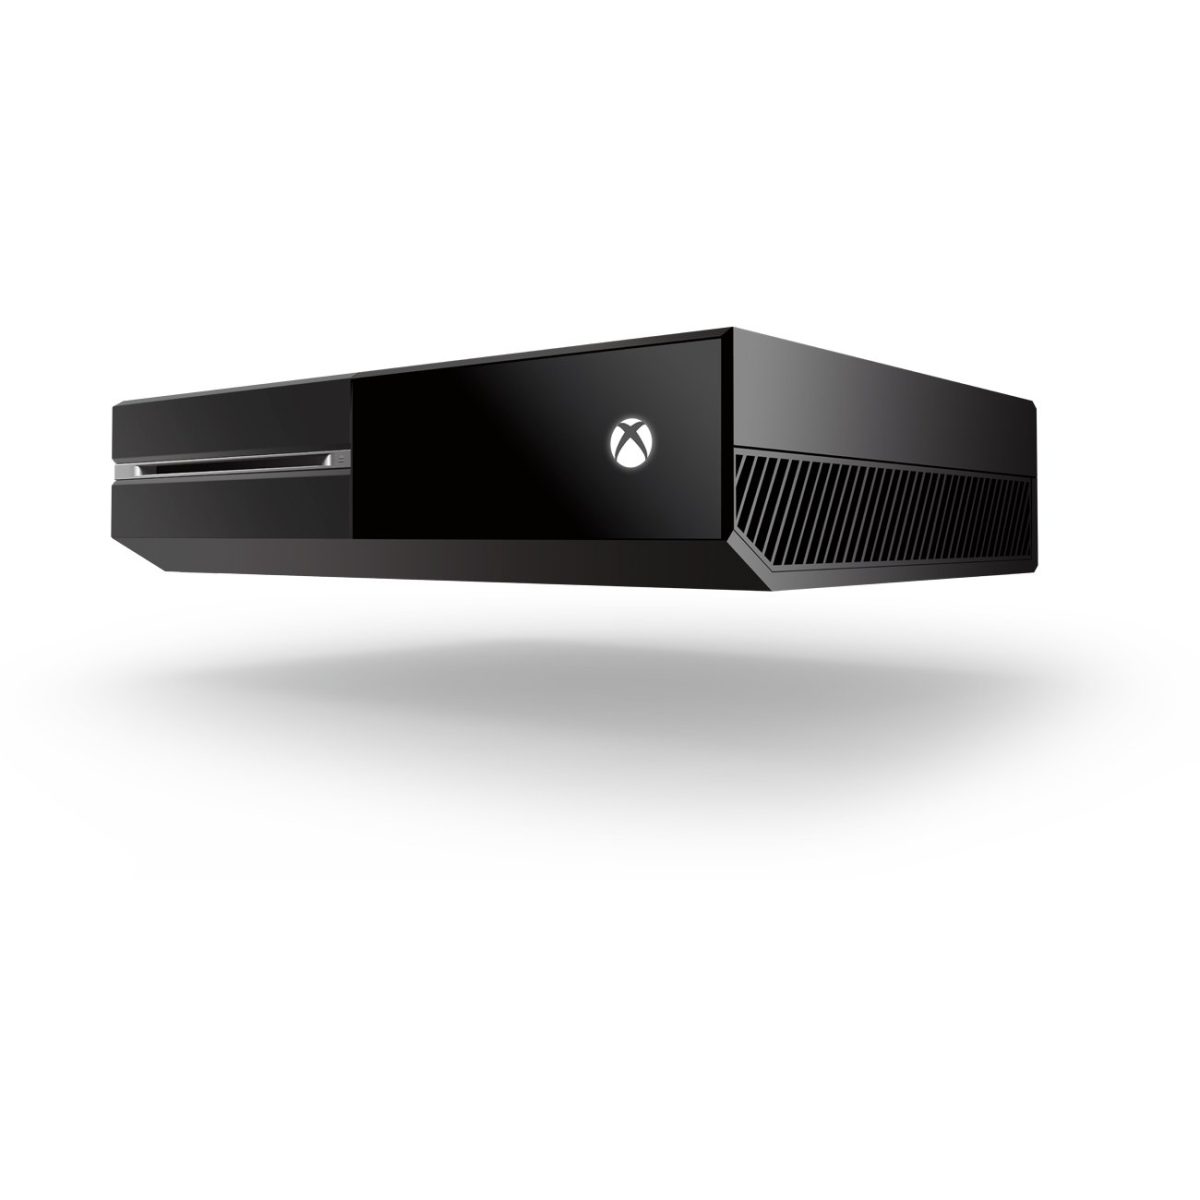 Xbox One +1 Joystick (USED)